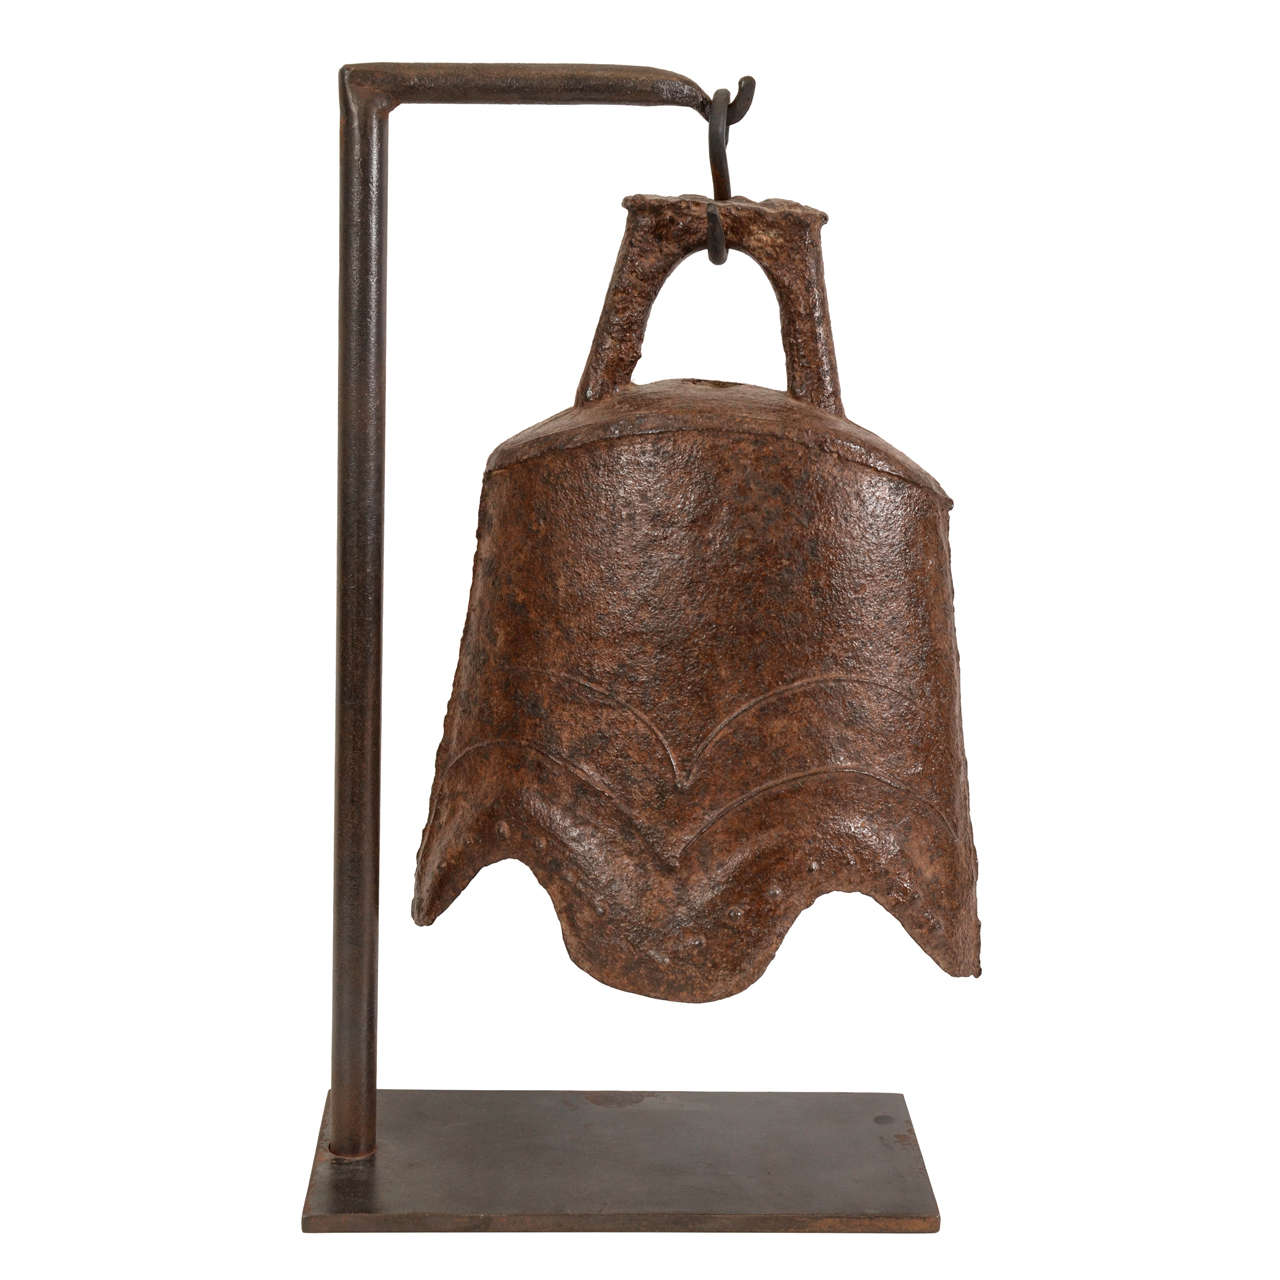 Elnmarsh Court Ridged Top Rustic Cast Iron Reception Bell 